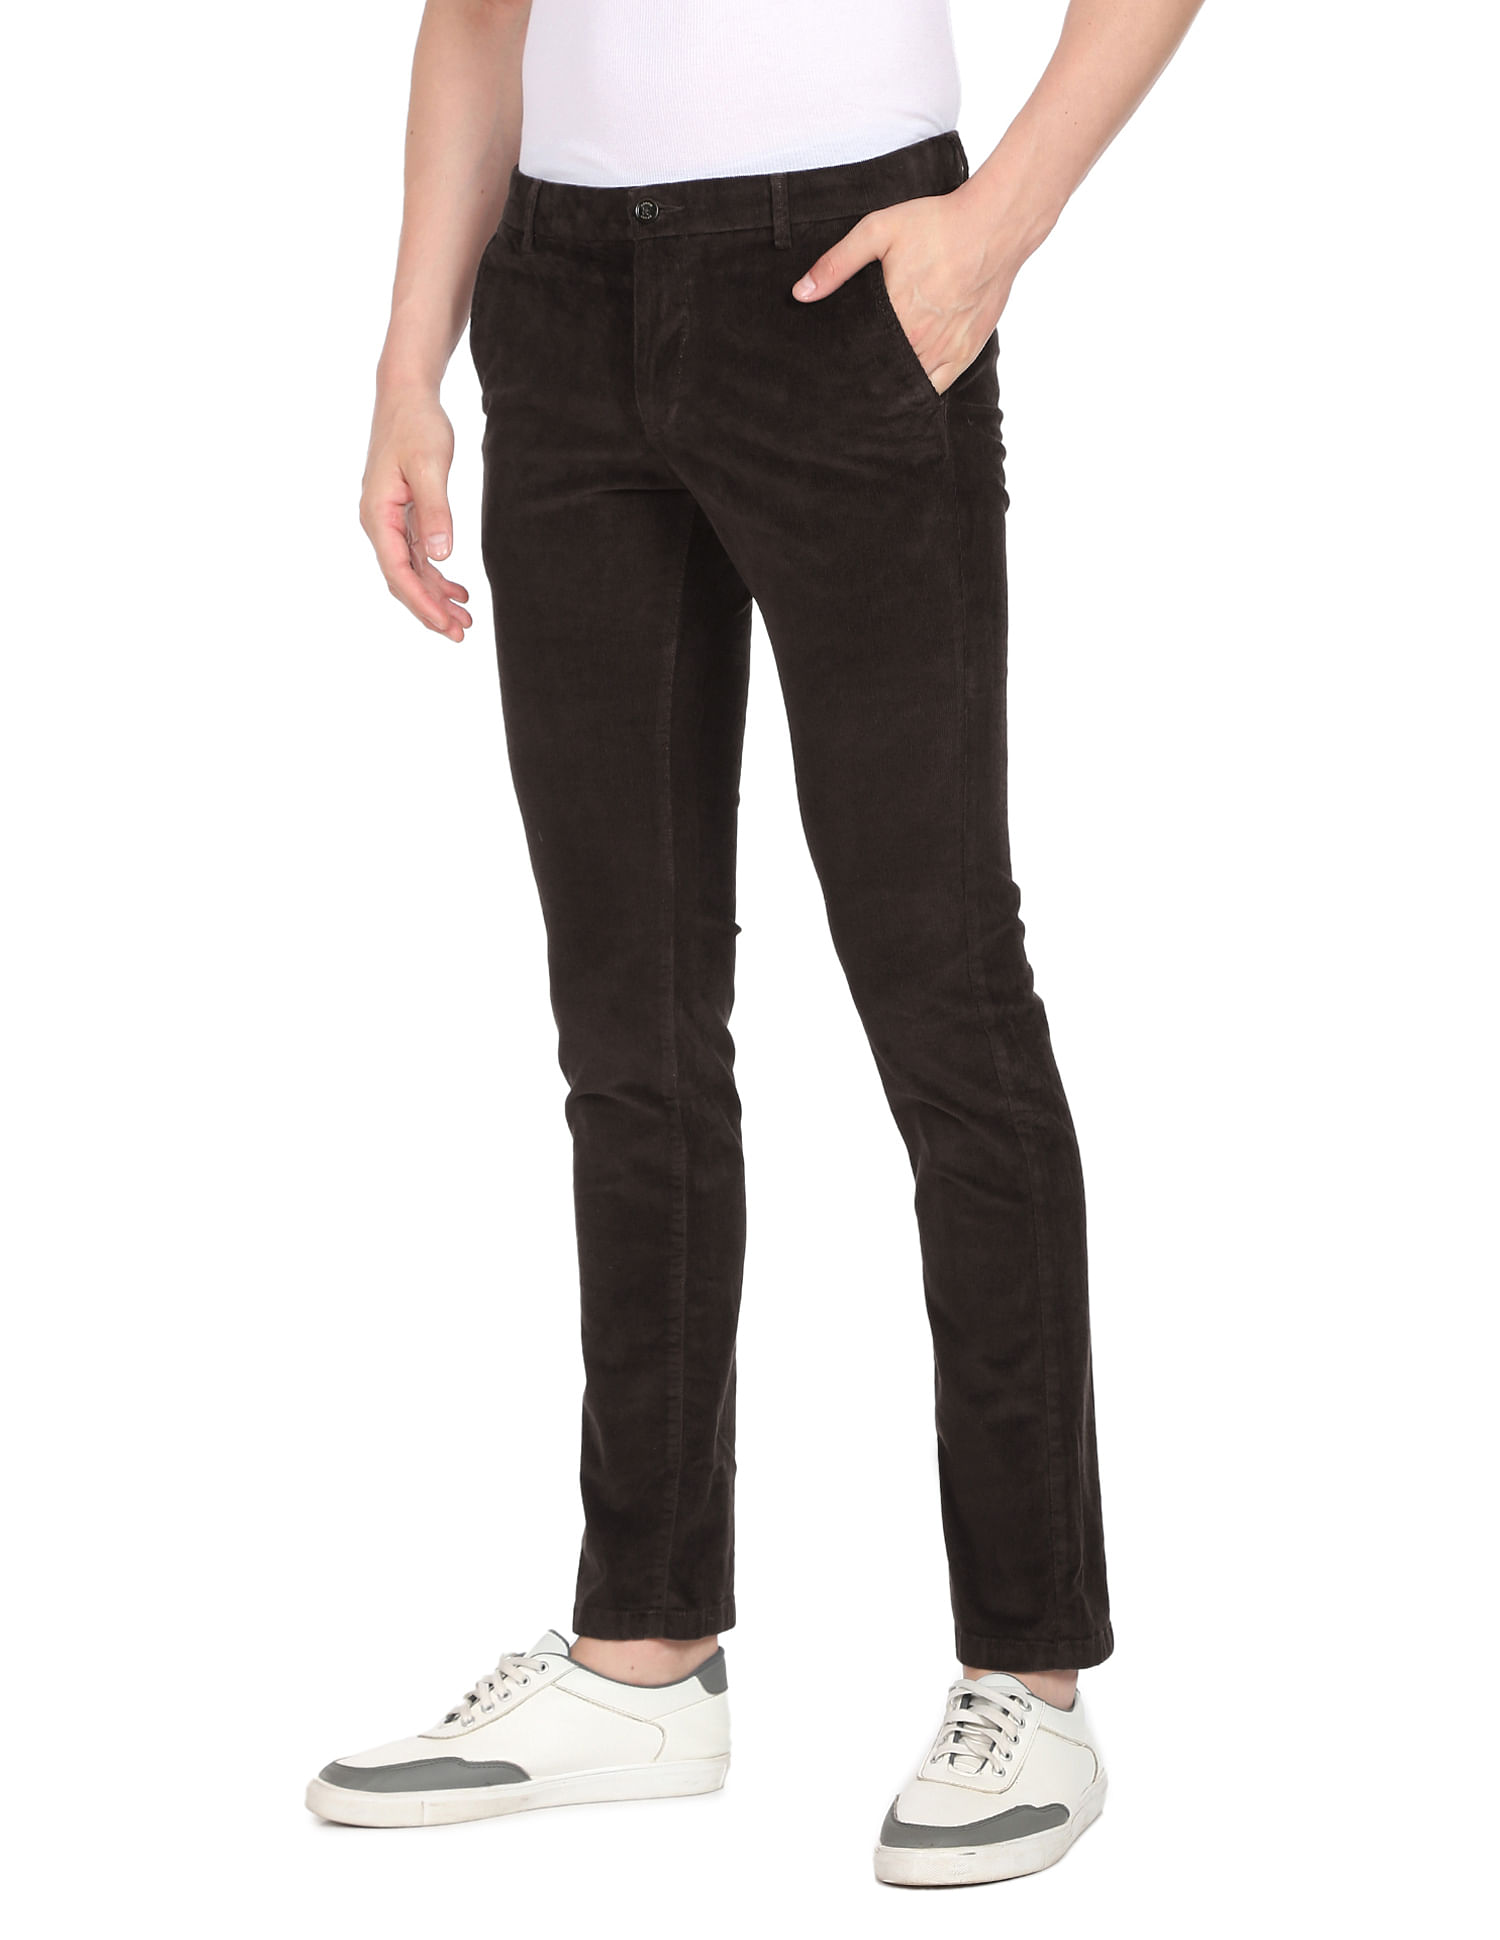 Buy bossini Gracious Mens Pants Slim Fit Solid Comfy Corduroy Pants Black  31Waist 33 at Amazonin